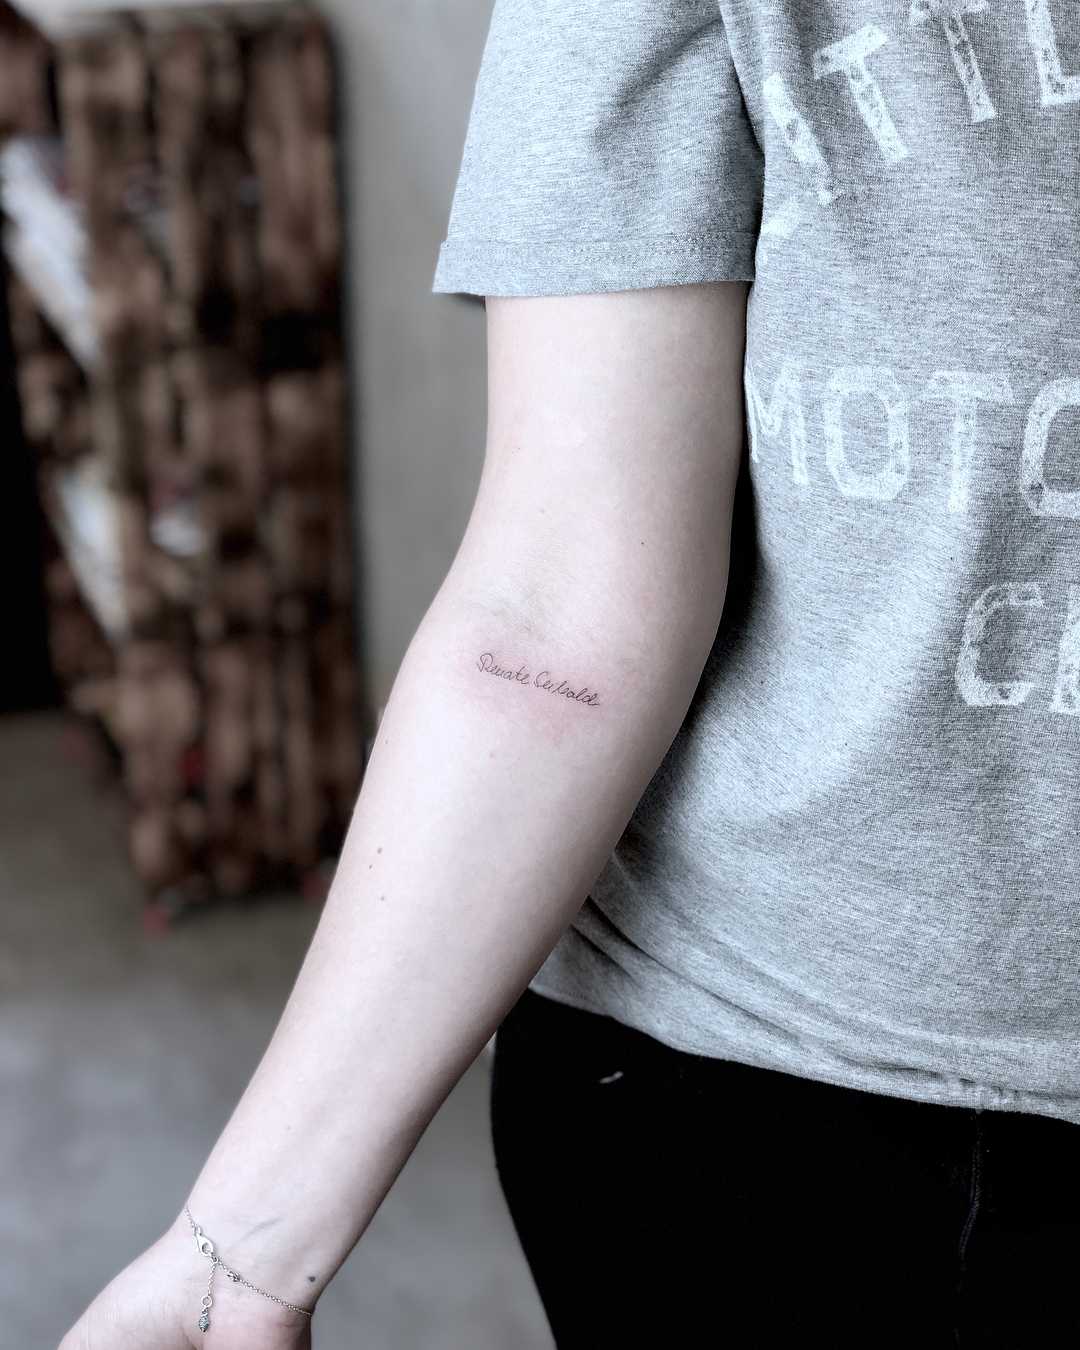 Single needle signature tattoo by Lox Luna